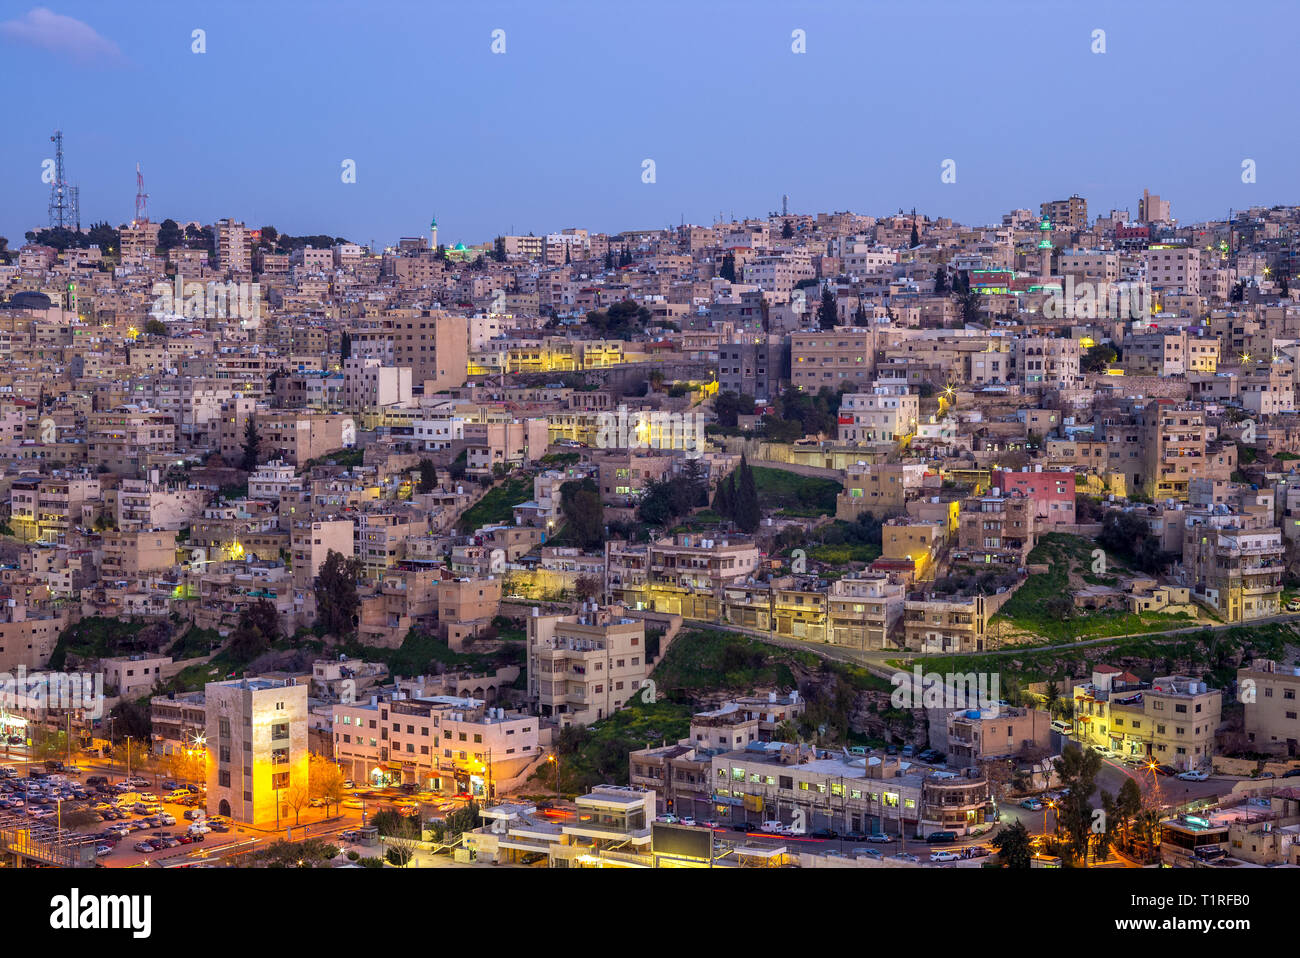 skyline of Amman, capital of Jordan, at dusk Stock Photo